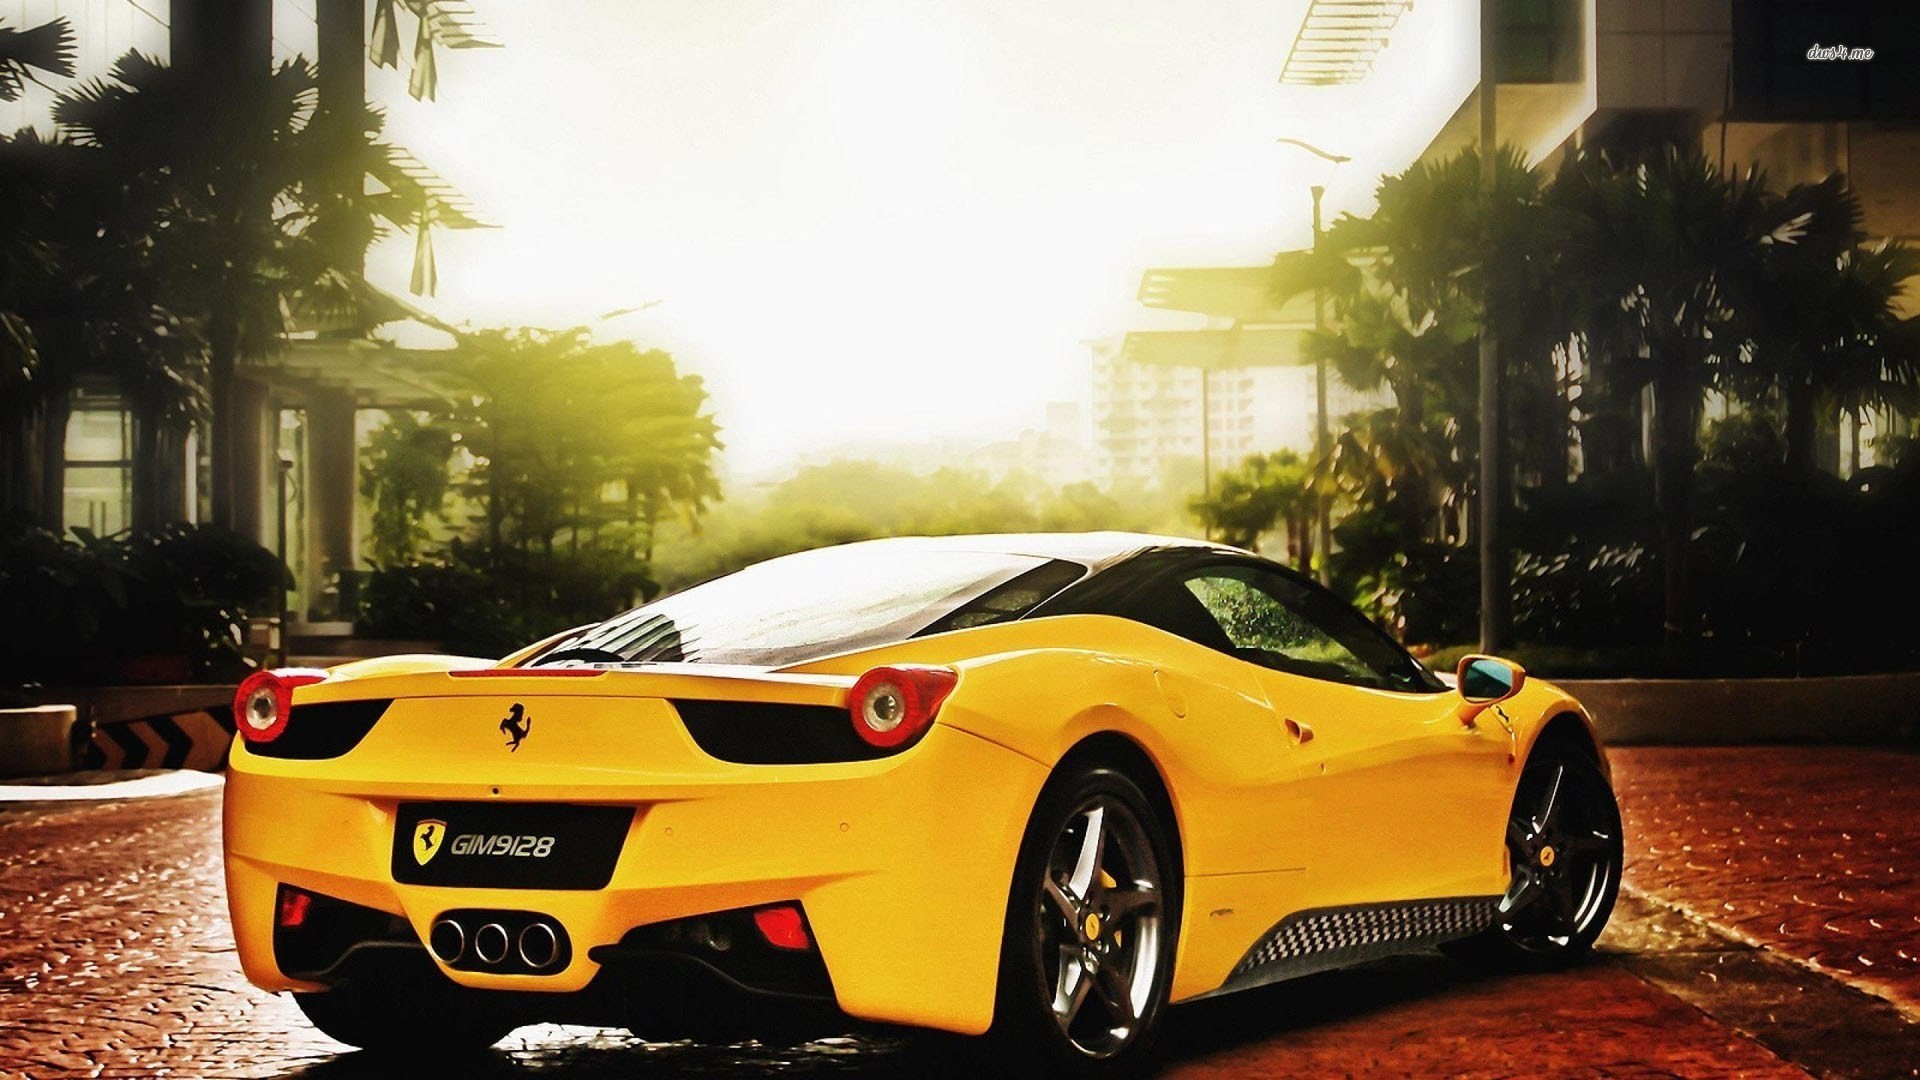 1920x1080 Ferrari 458 Italia Wallpaper Car Wallpapers 13659 Hd 1080p